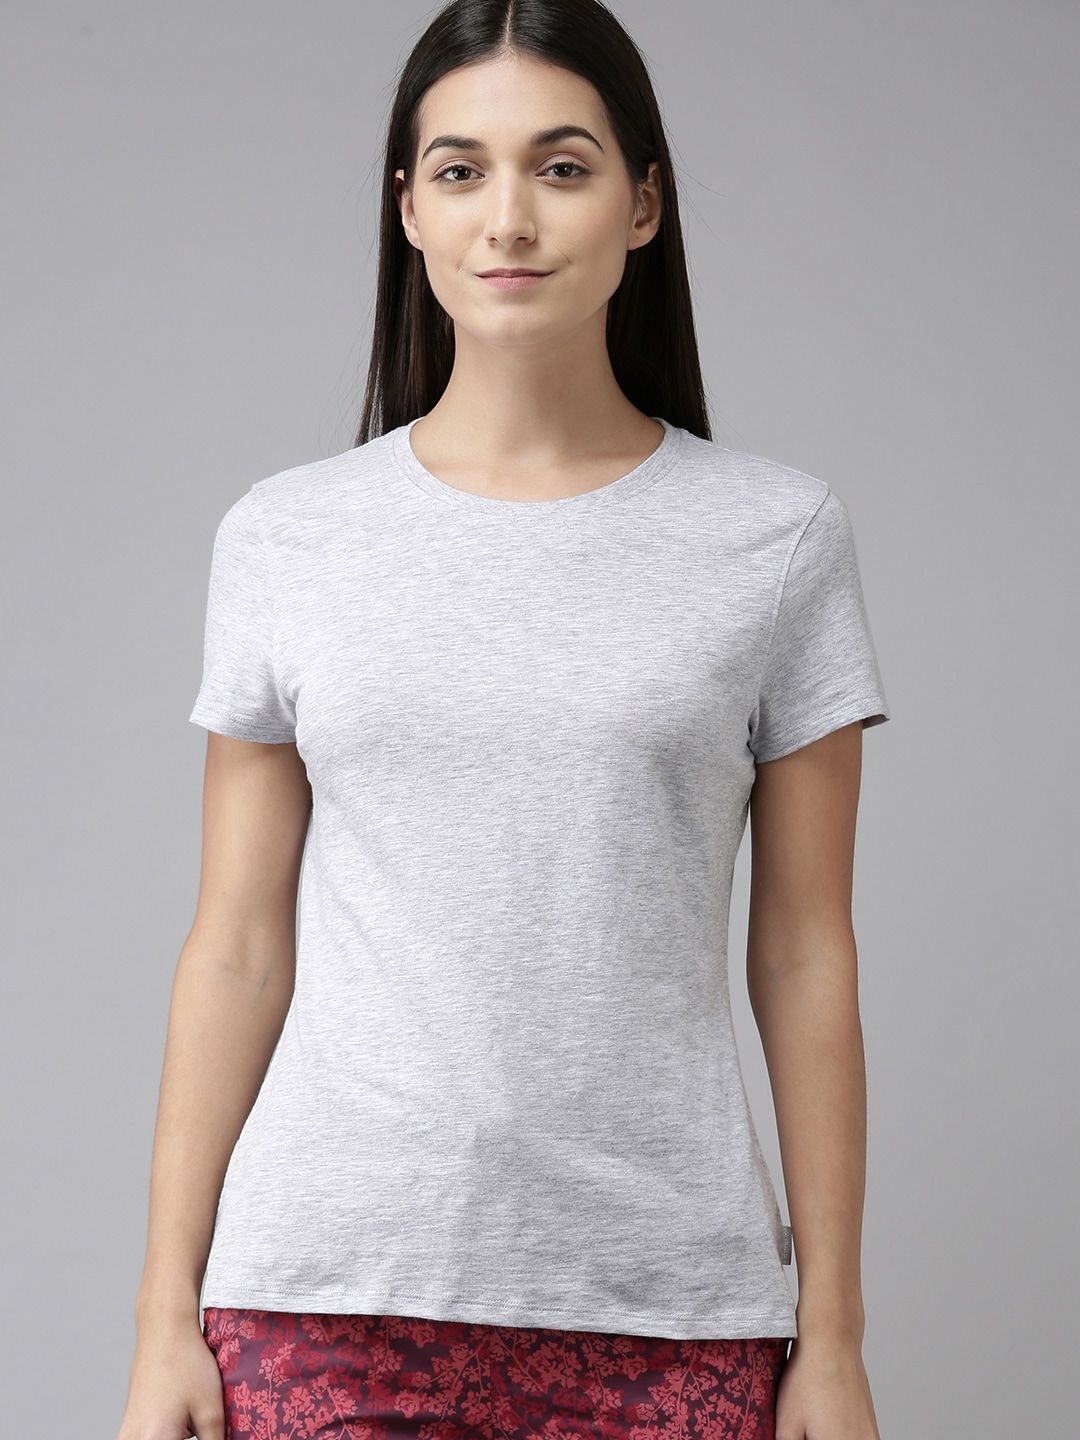 Van Heusen Women Grey Melange Solid Pure Cotton Lounge T-shirt Price in India